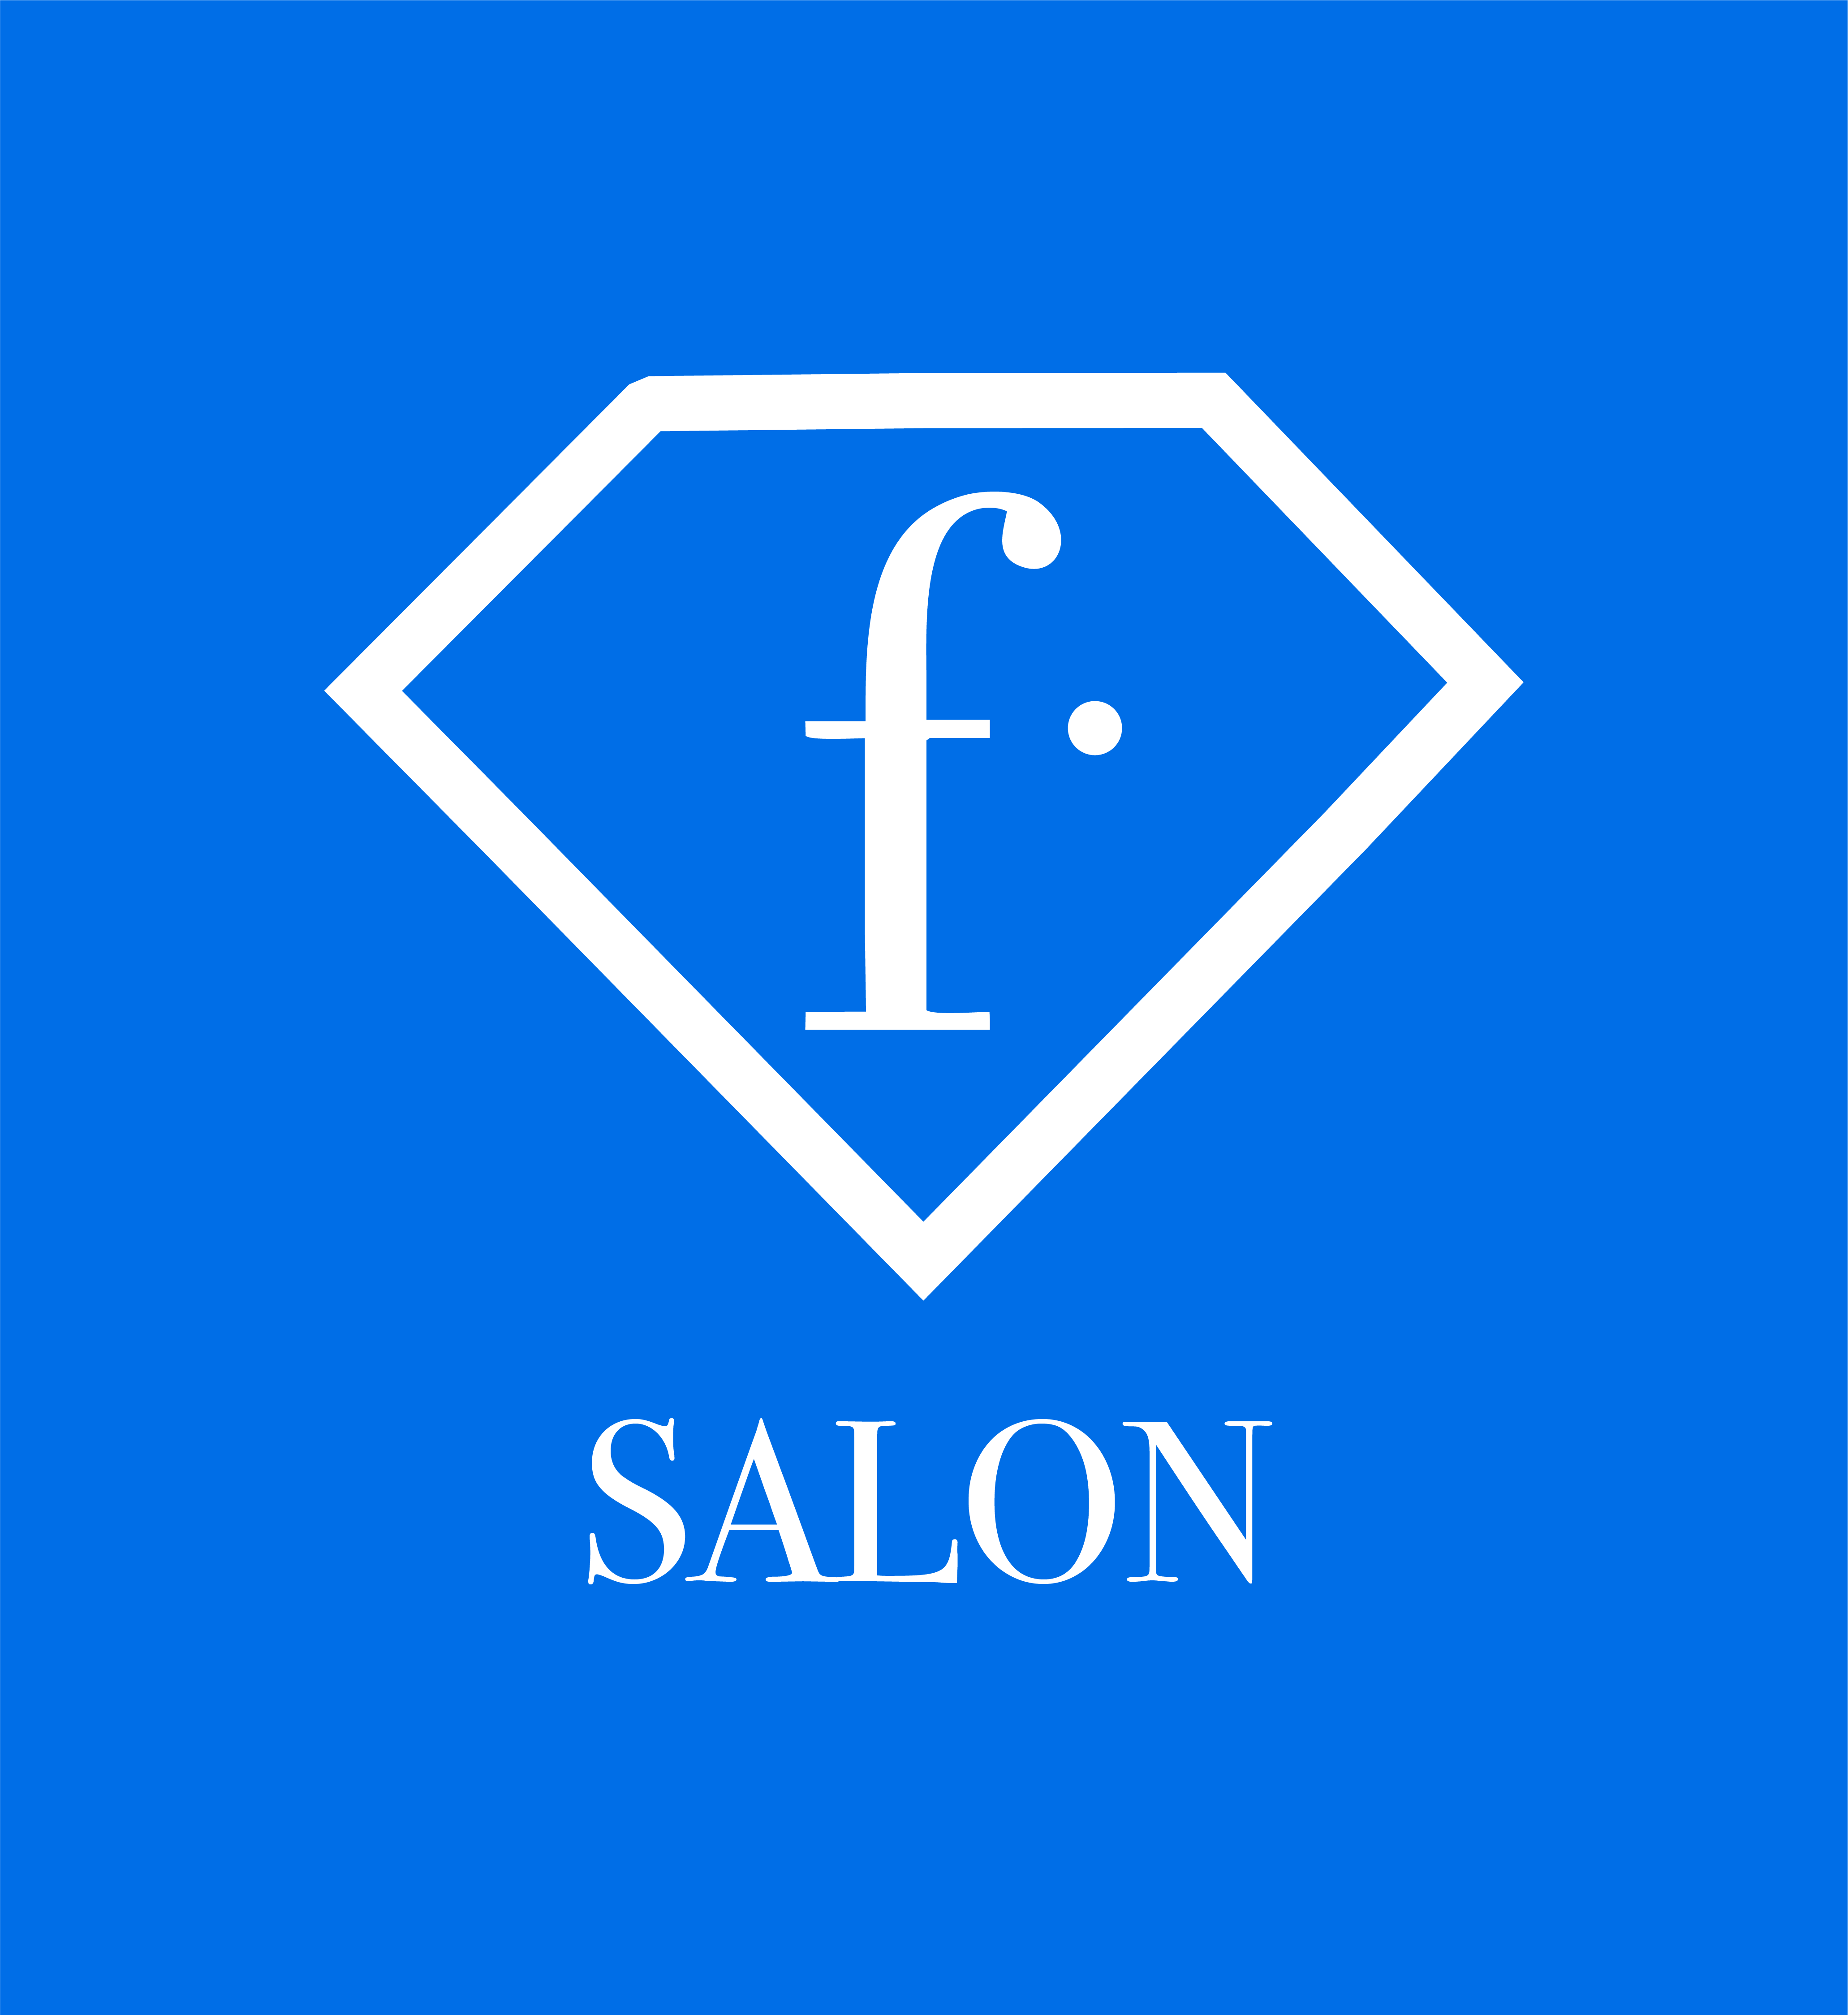 Launches F salon in Bhopal from Fashion TV India, Bhopal, Madhya Pradesh, India